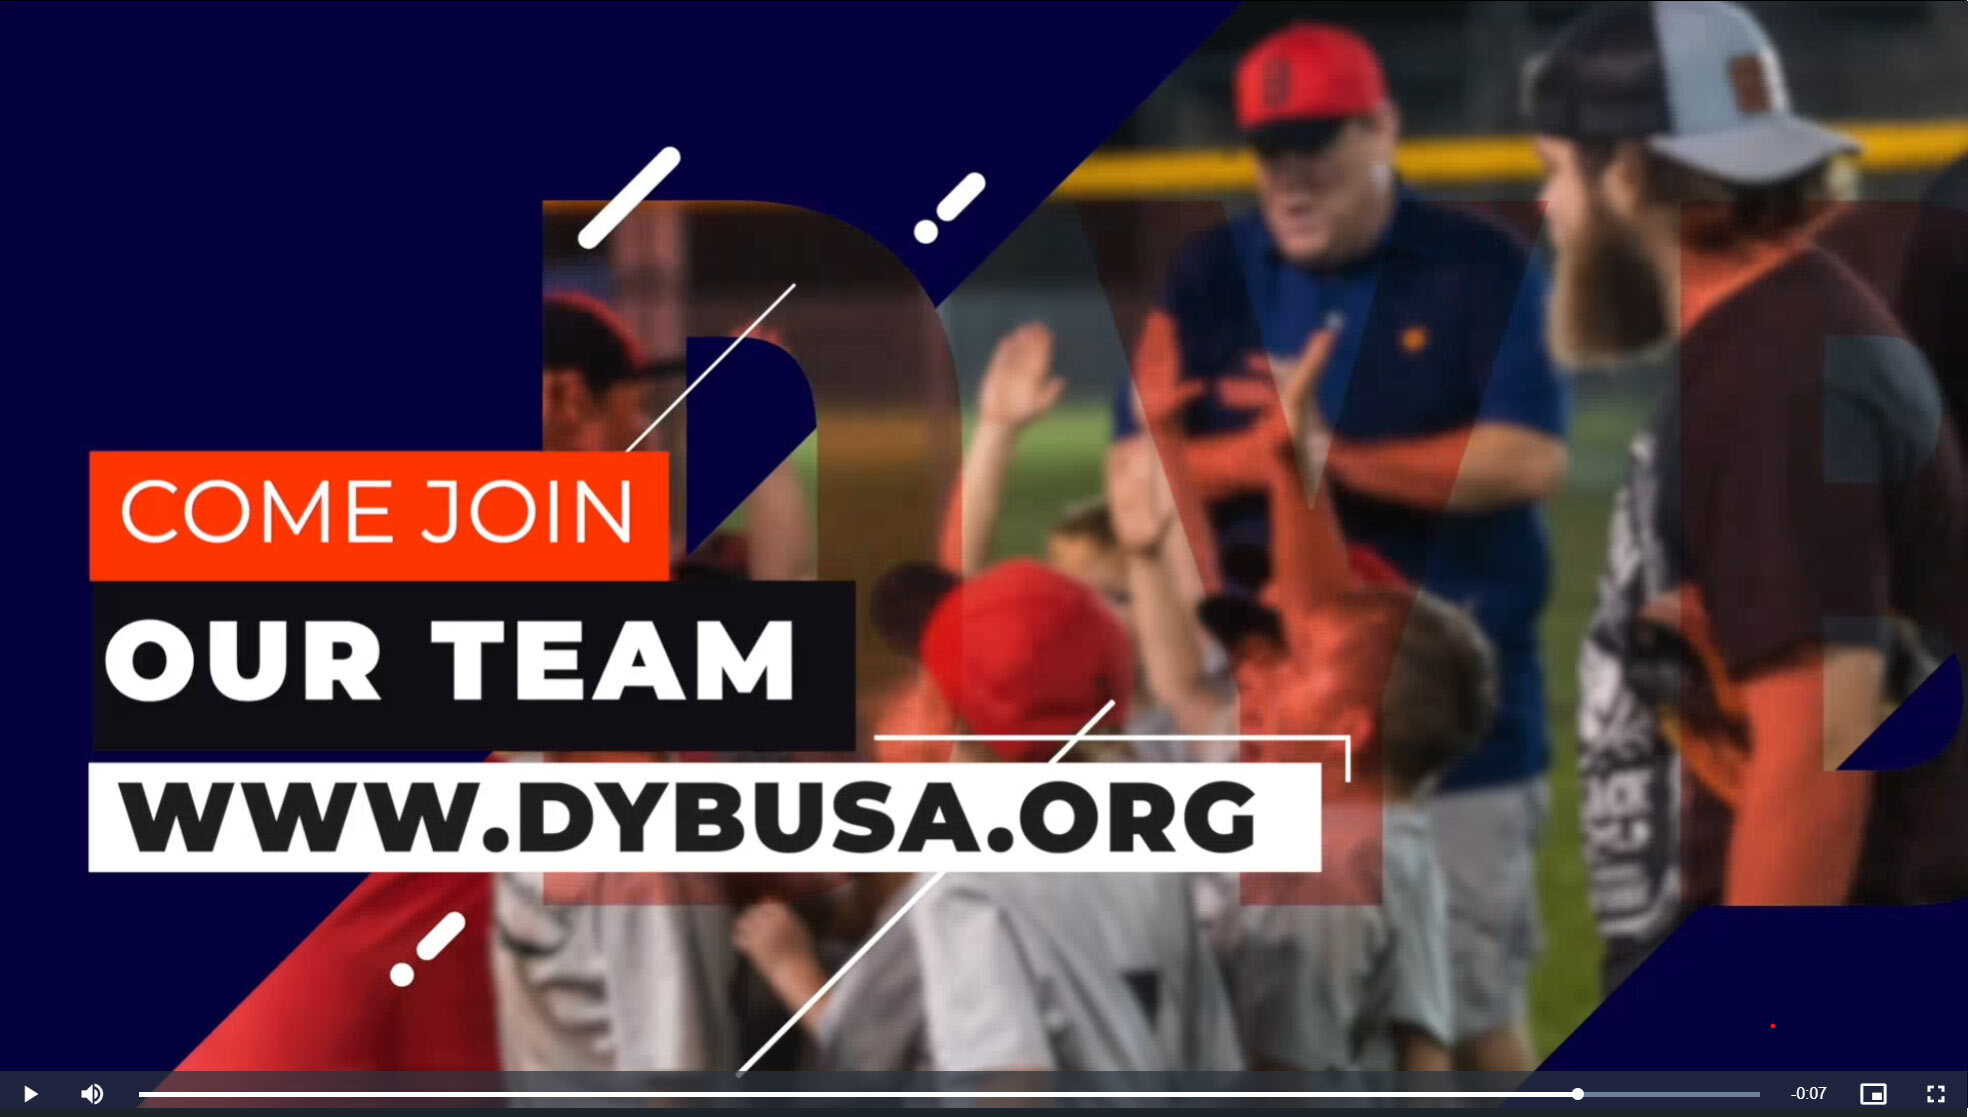 MLB Detroit Tigers Youth / Kids 3D-Style Hardball Tie-Dye T-Shirt - Hockey  Cards Plus LLC